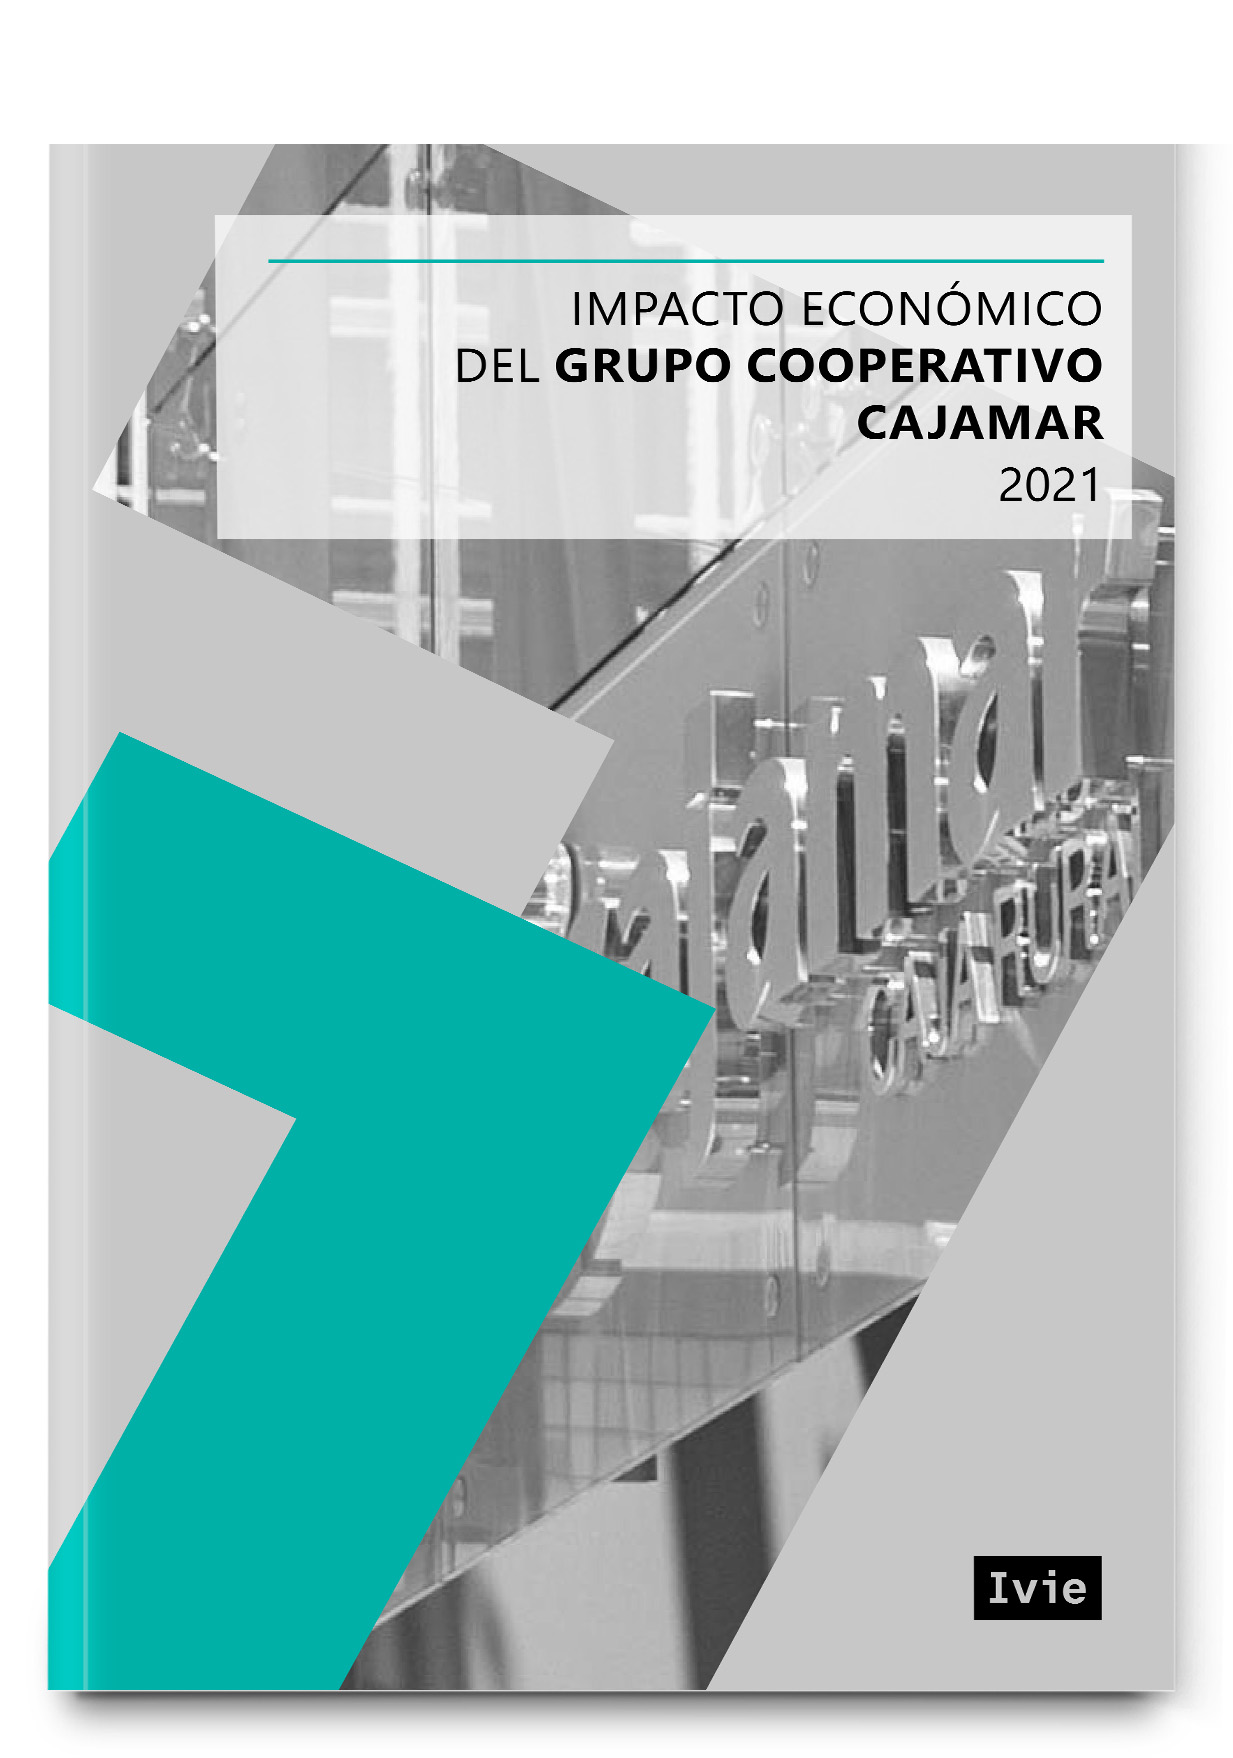 2021 Economic Impact of the Grupo Cooperativo Cajamar